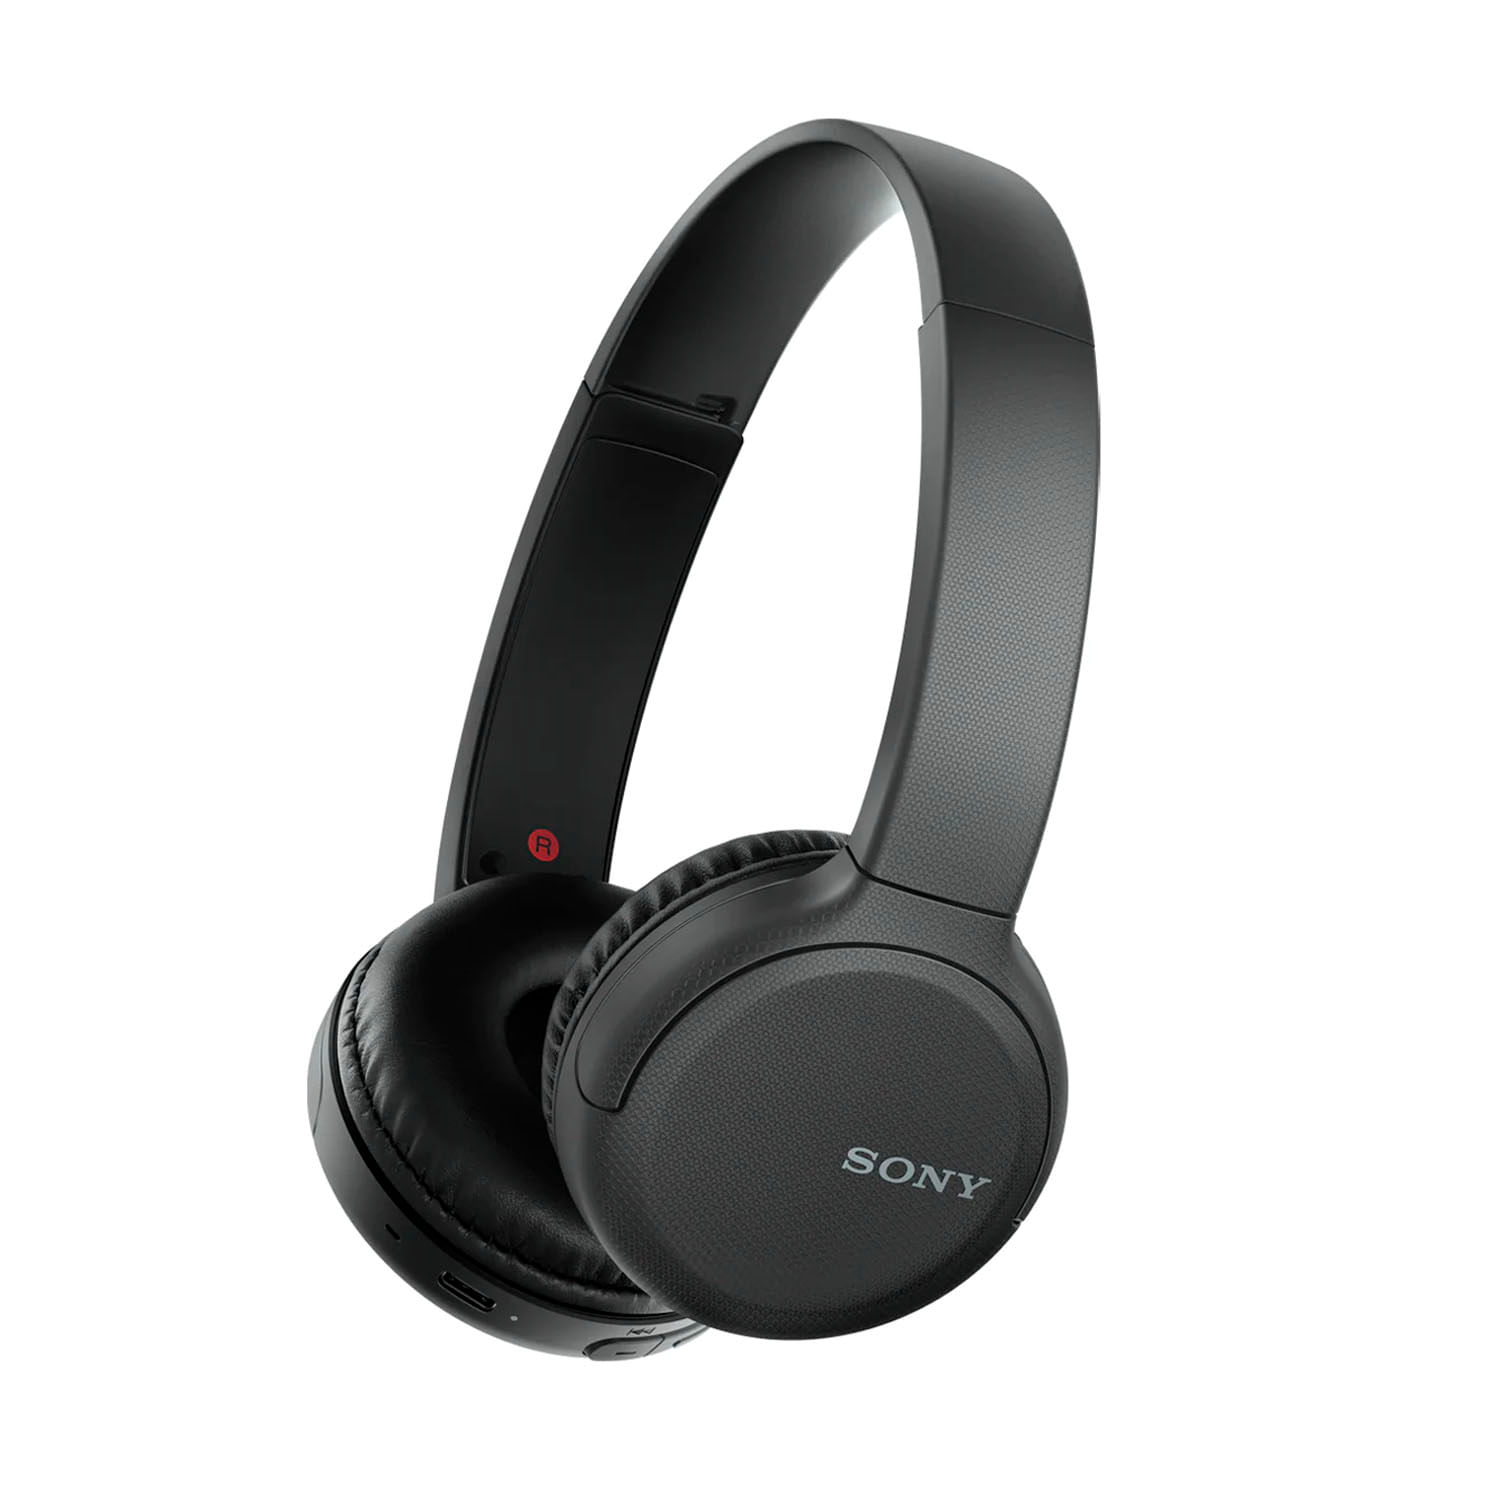 Audífonos Sony WH-CH510 Bluetooth 35 Horas con Micrófono Negro